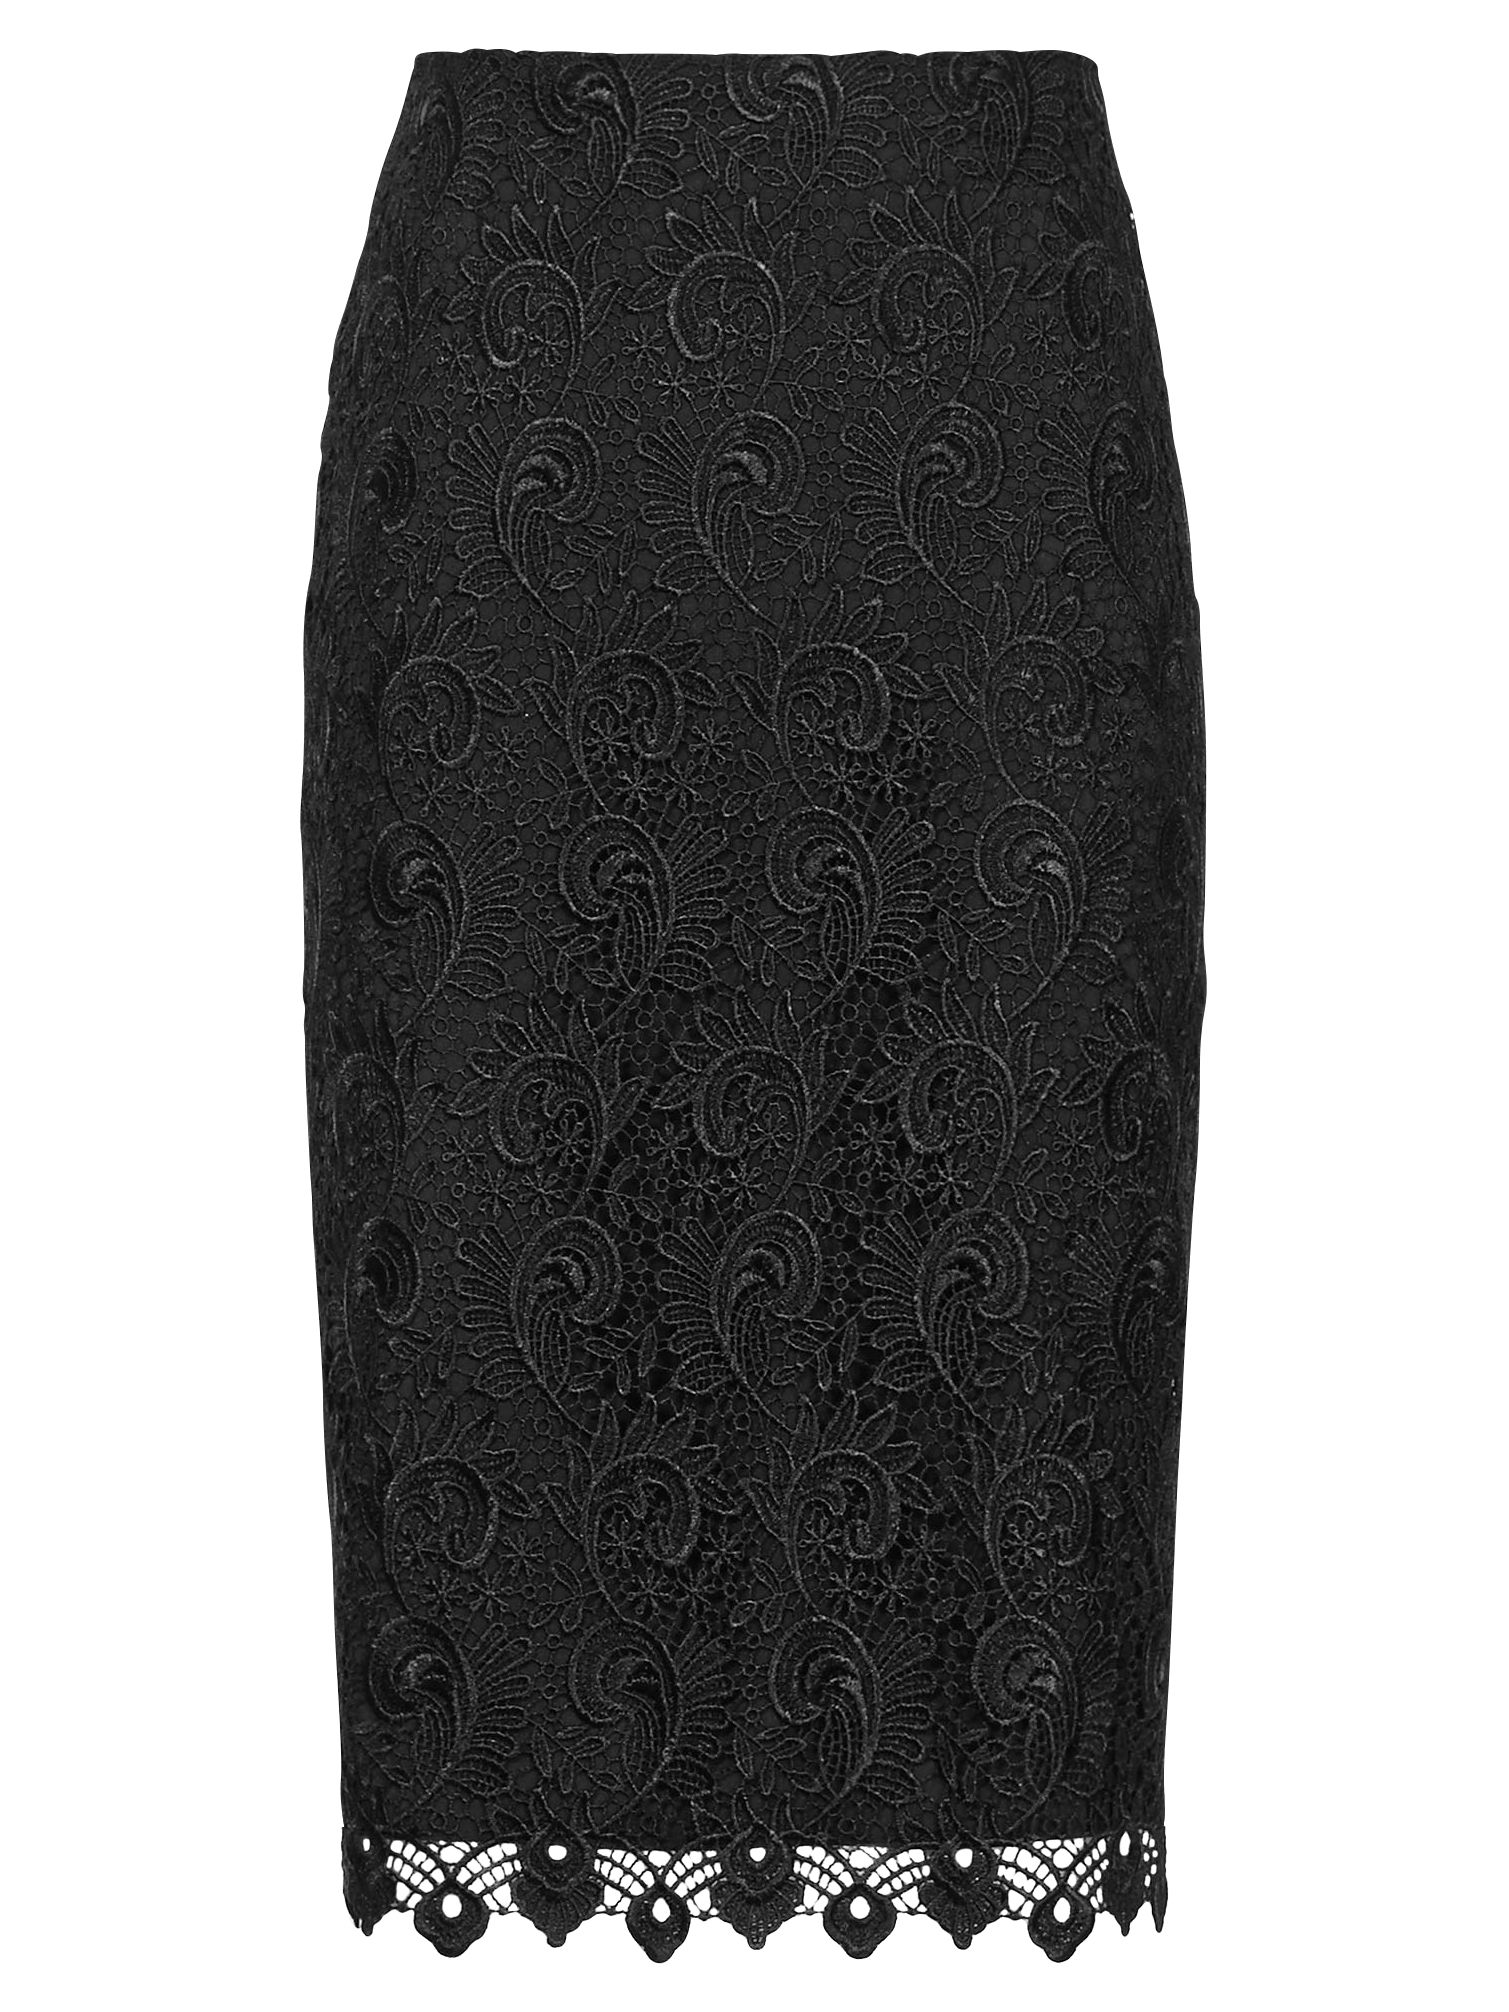 Reiss Orta Lace Pencil Skirt, Black at John Lewis & Partners